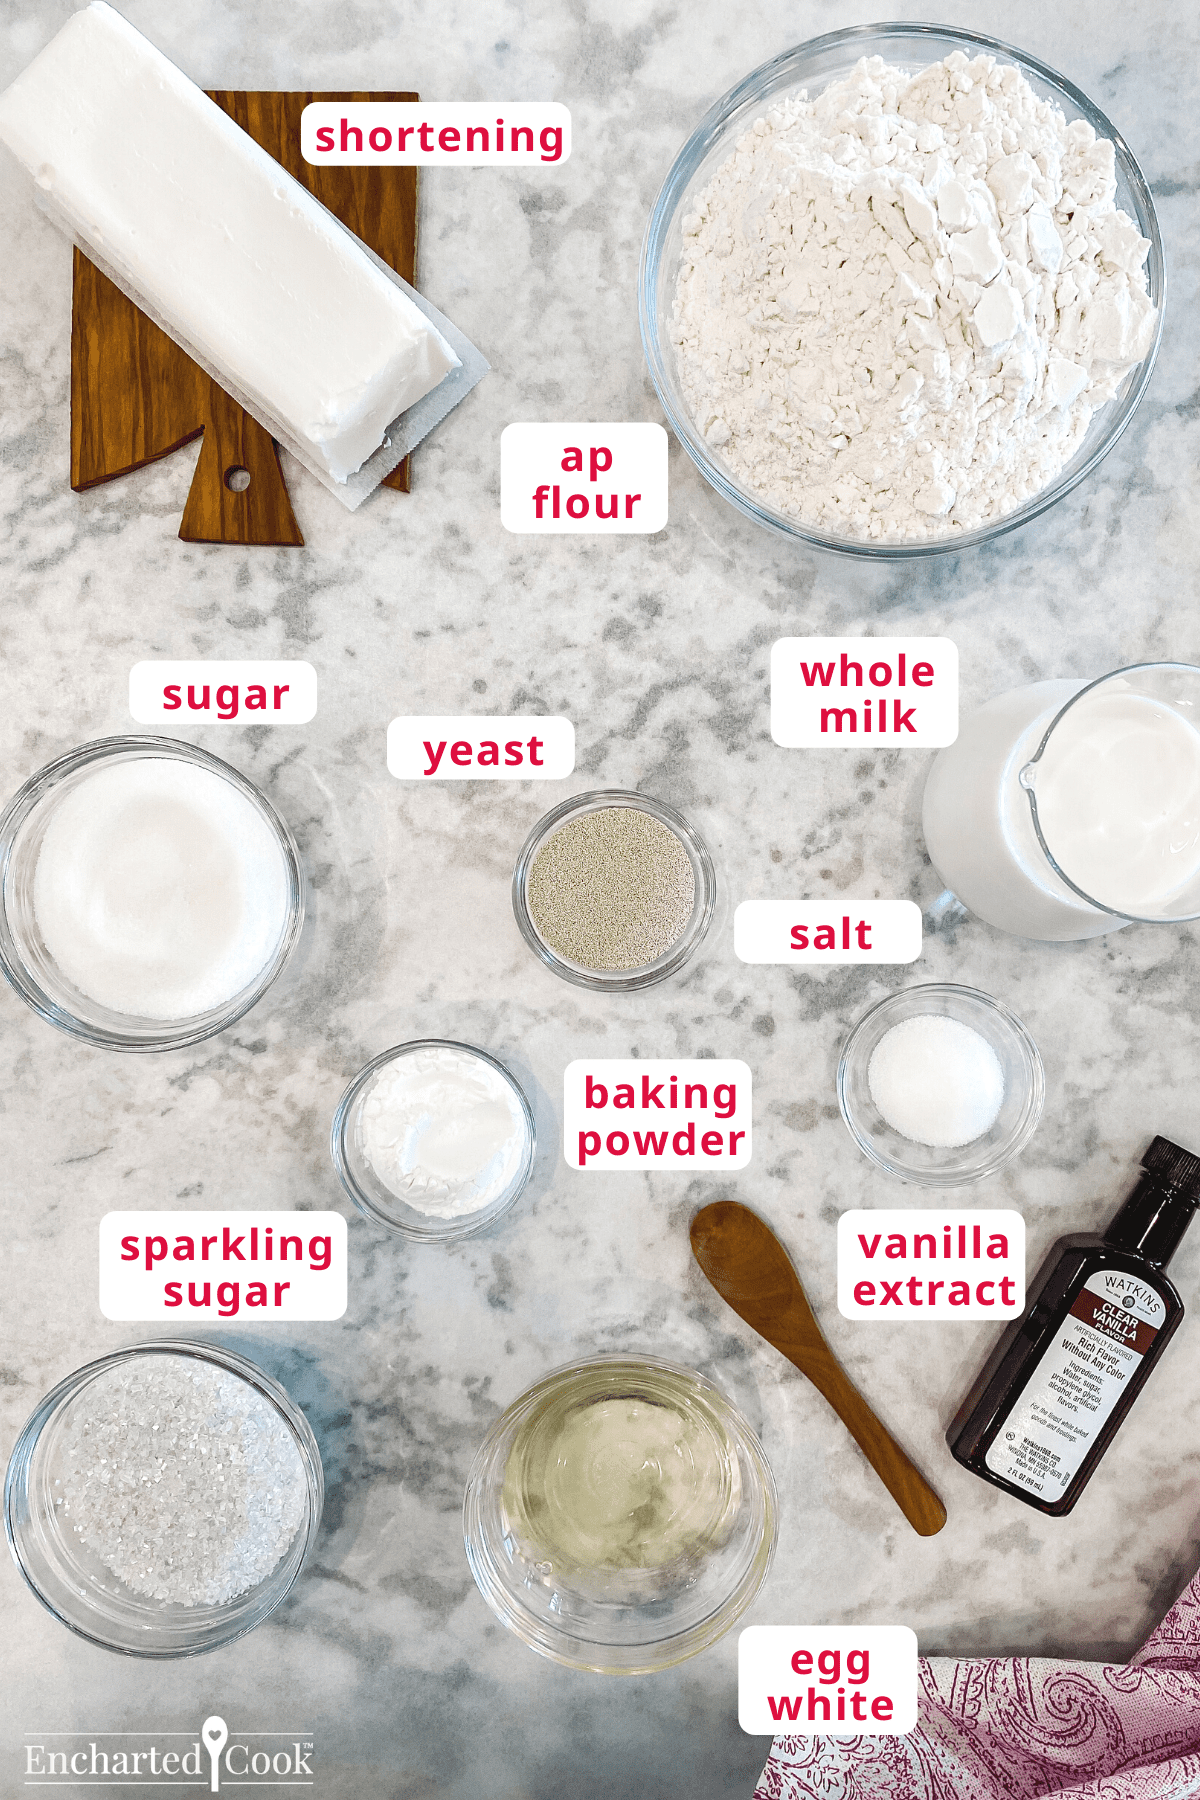 The ingredients clockwise from top left: shortening, ap flour, whole milk, salt, vanilla extract, egg white, sparkling sugar, baking powder, yeast, sugar.